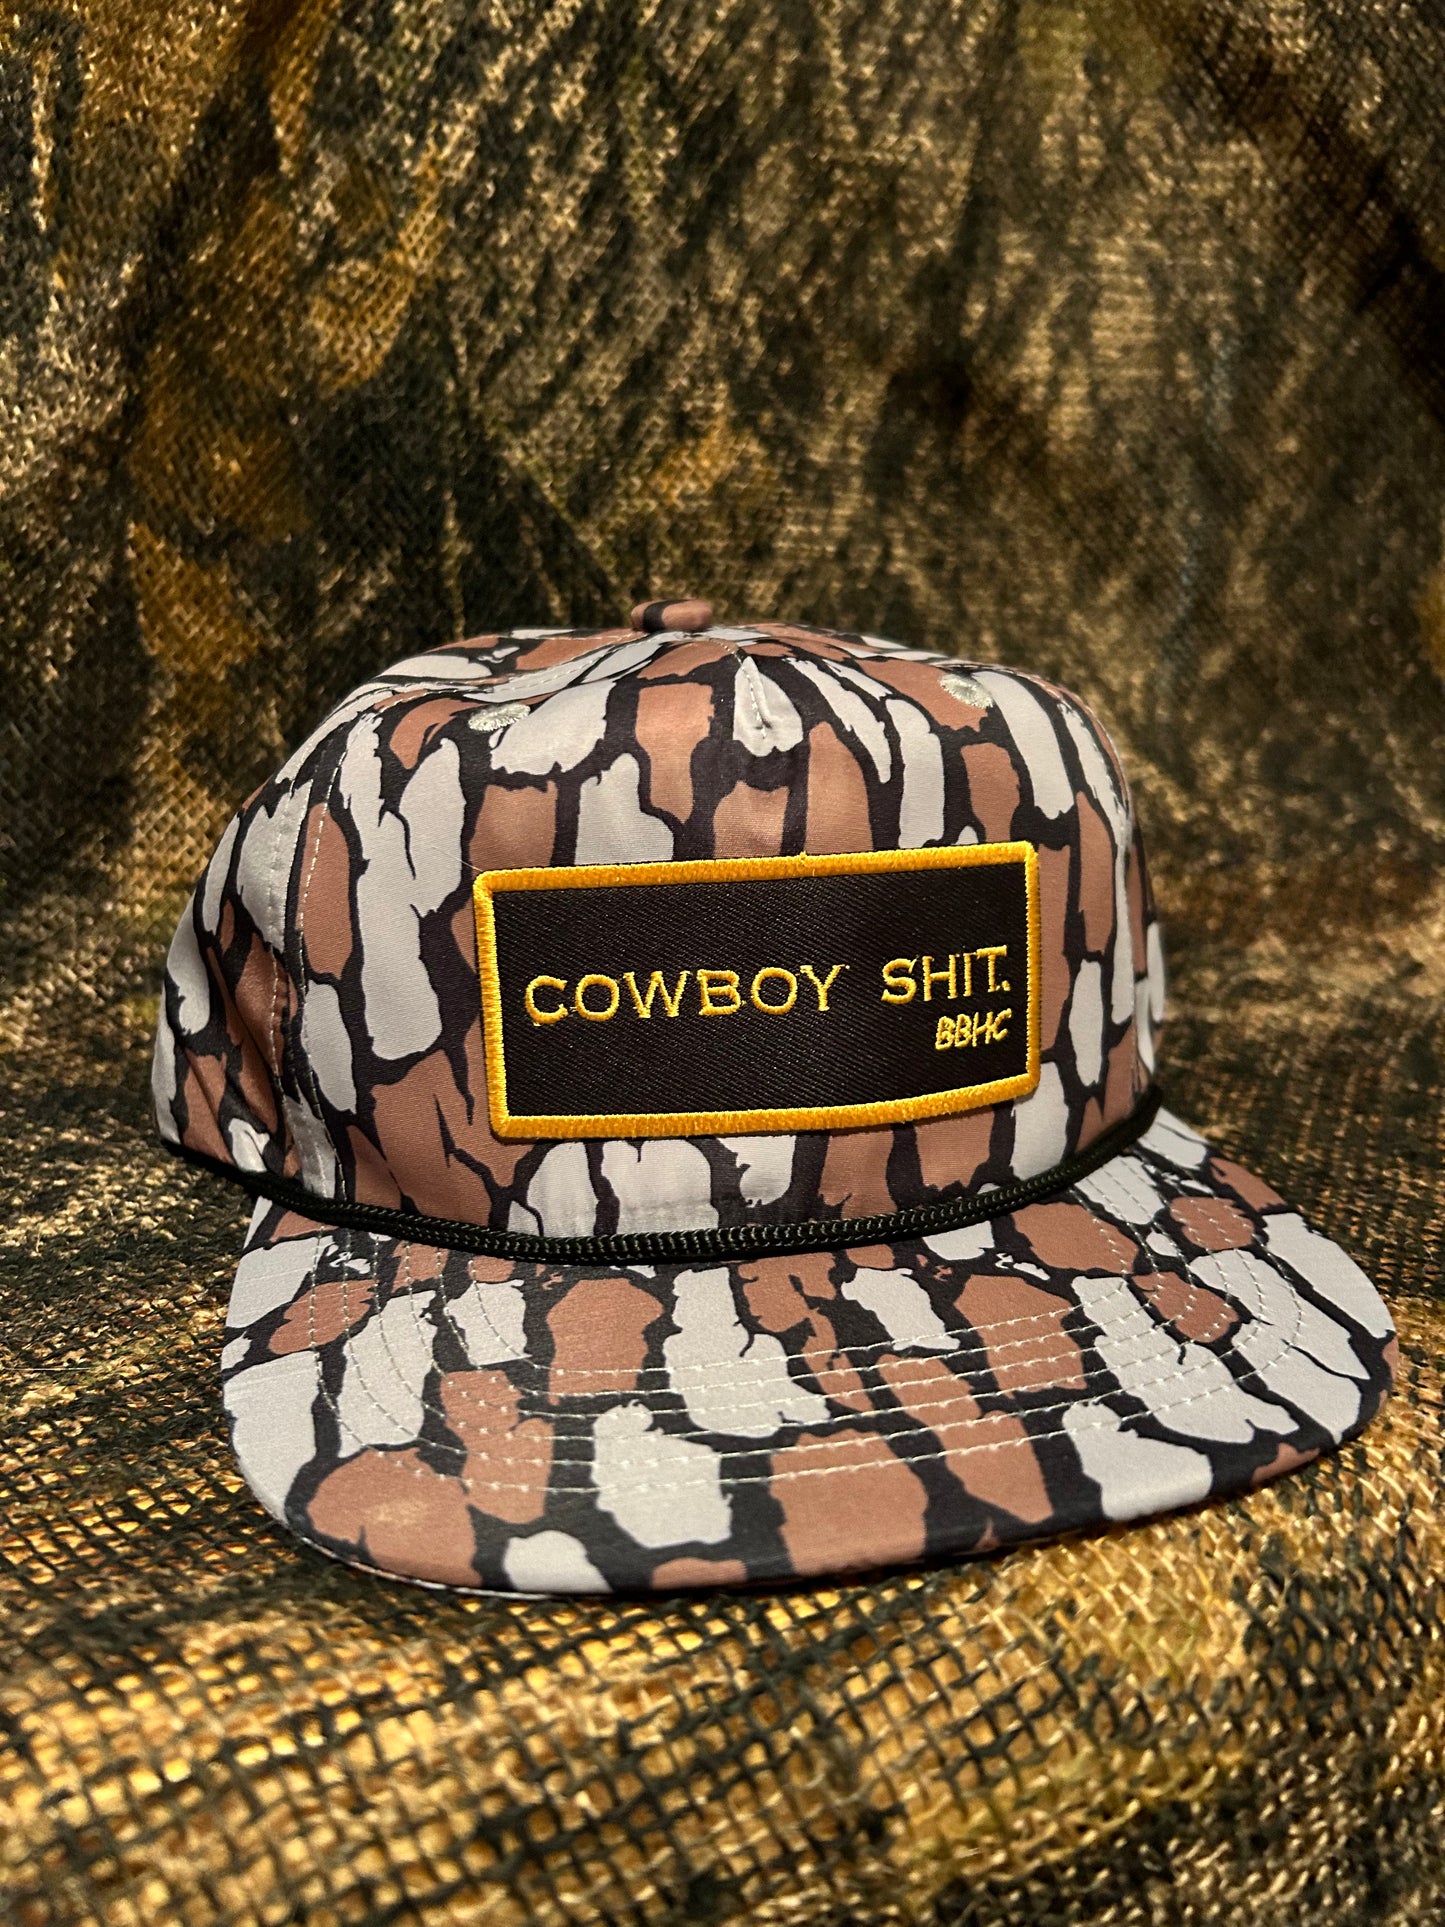 Cowboy Shit vintage oak Camo ropebrim SnapBack hat